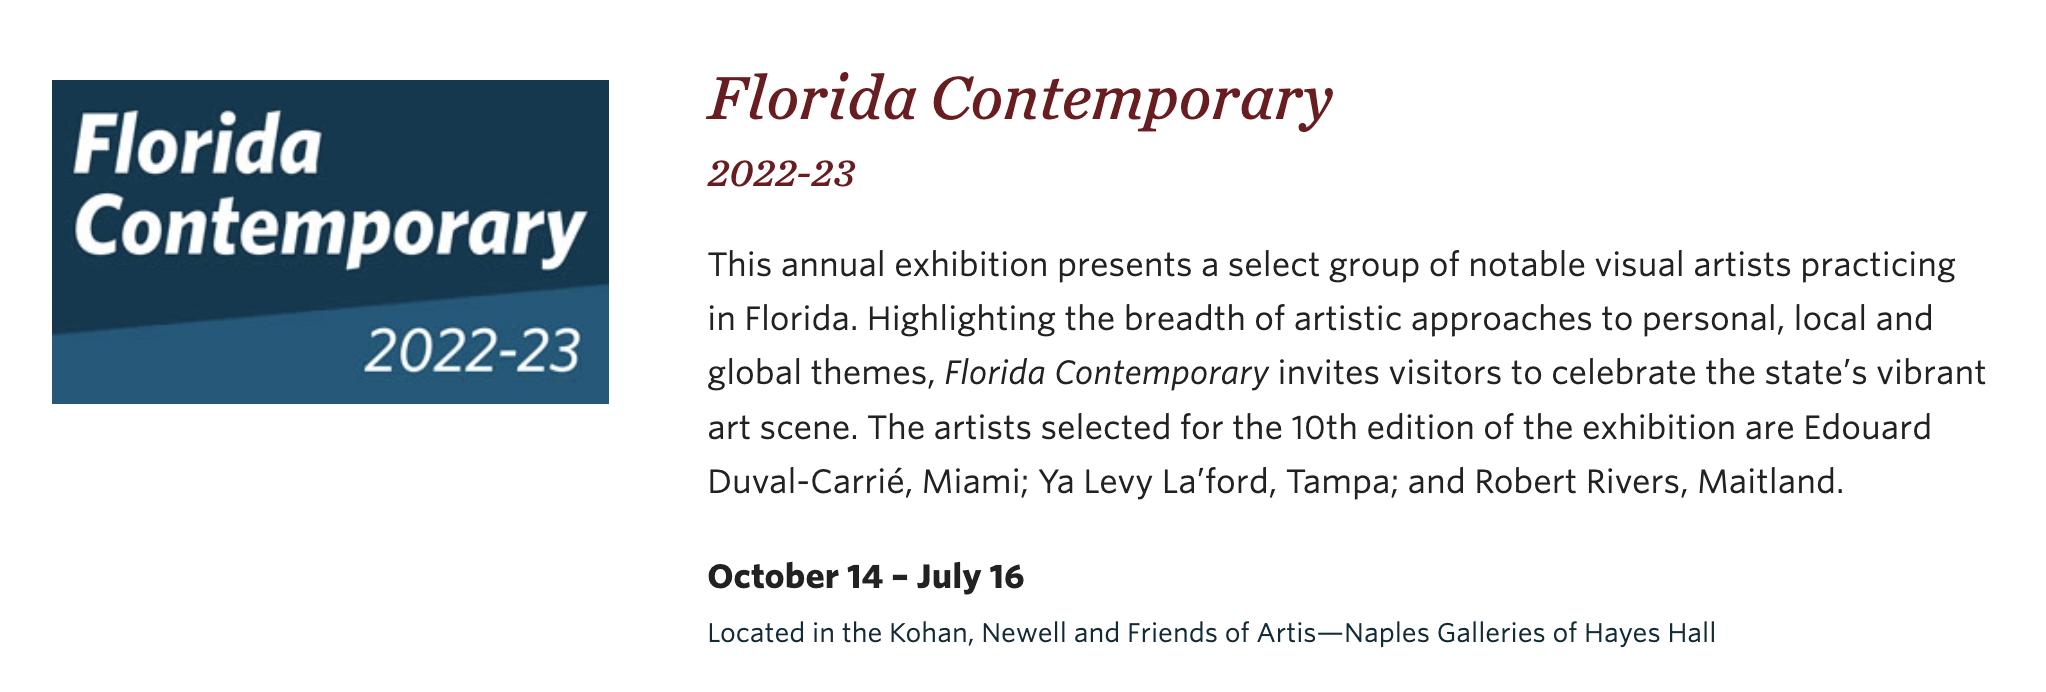 Florida Contemporary 2022-23 at Artis—Naples, The Baker Museum.